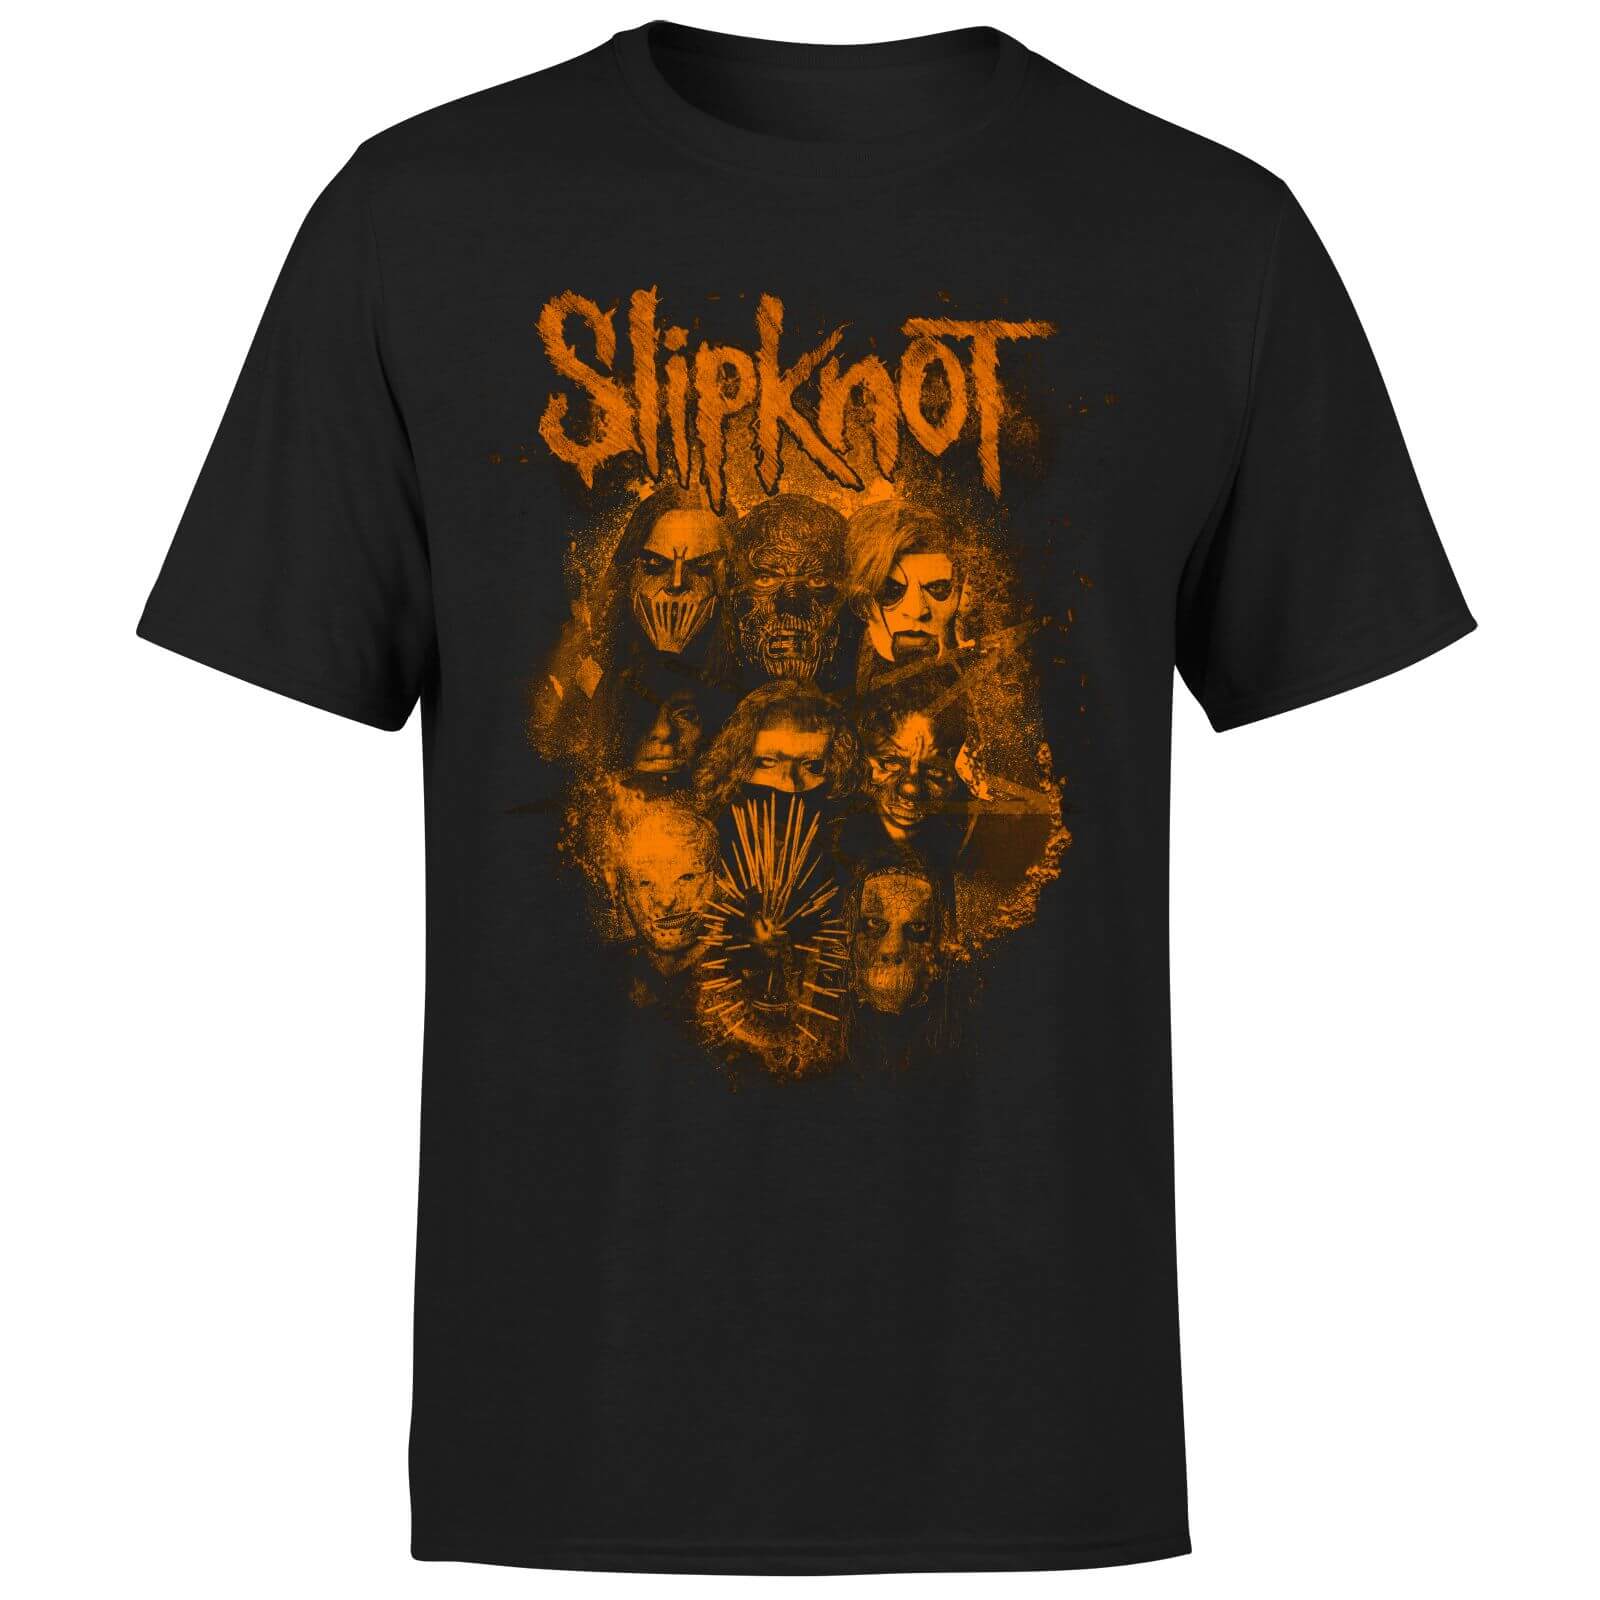 Slipknot Bold Patch T-Shirt - Black - M - Black